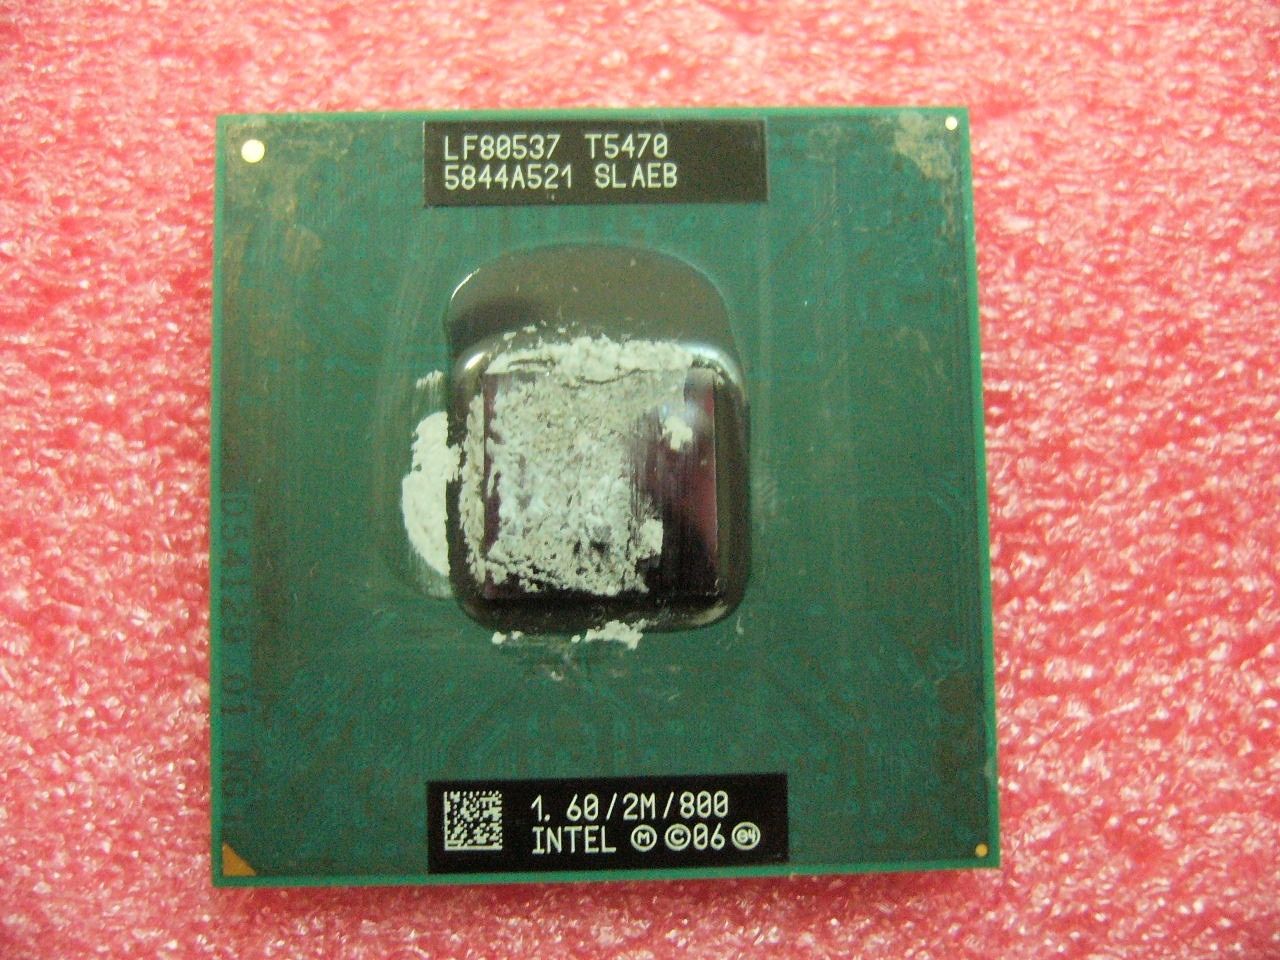 QTY 1x INTEL Core 2 Duo T5470 1.6 GHz/2M/800Mhz Processor for Laptop SLAEB